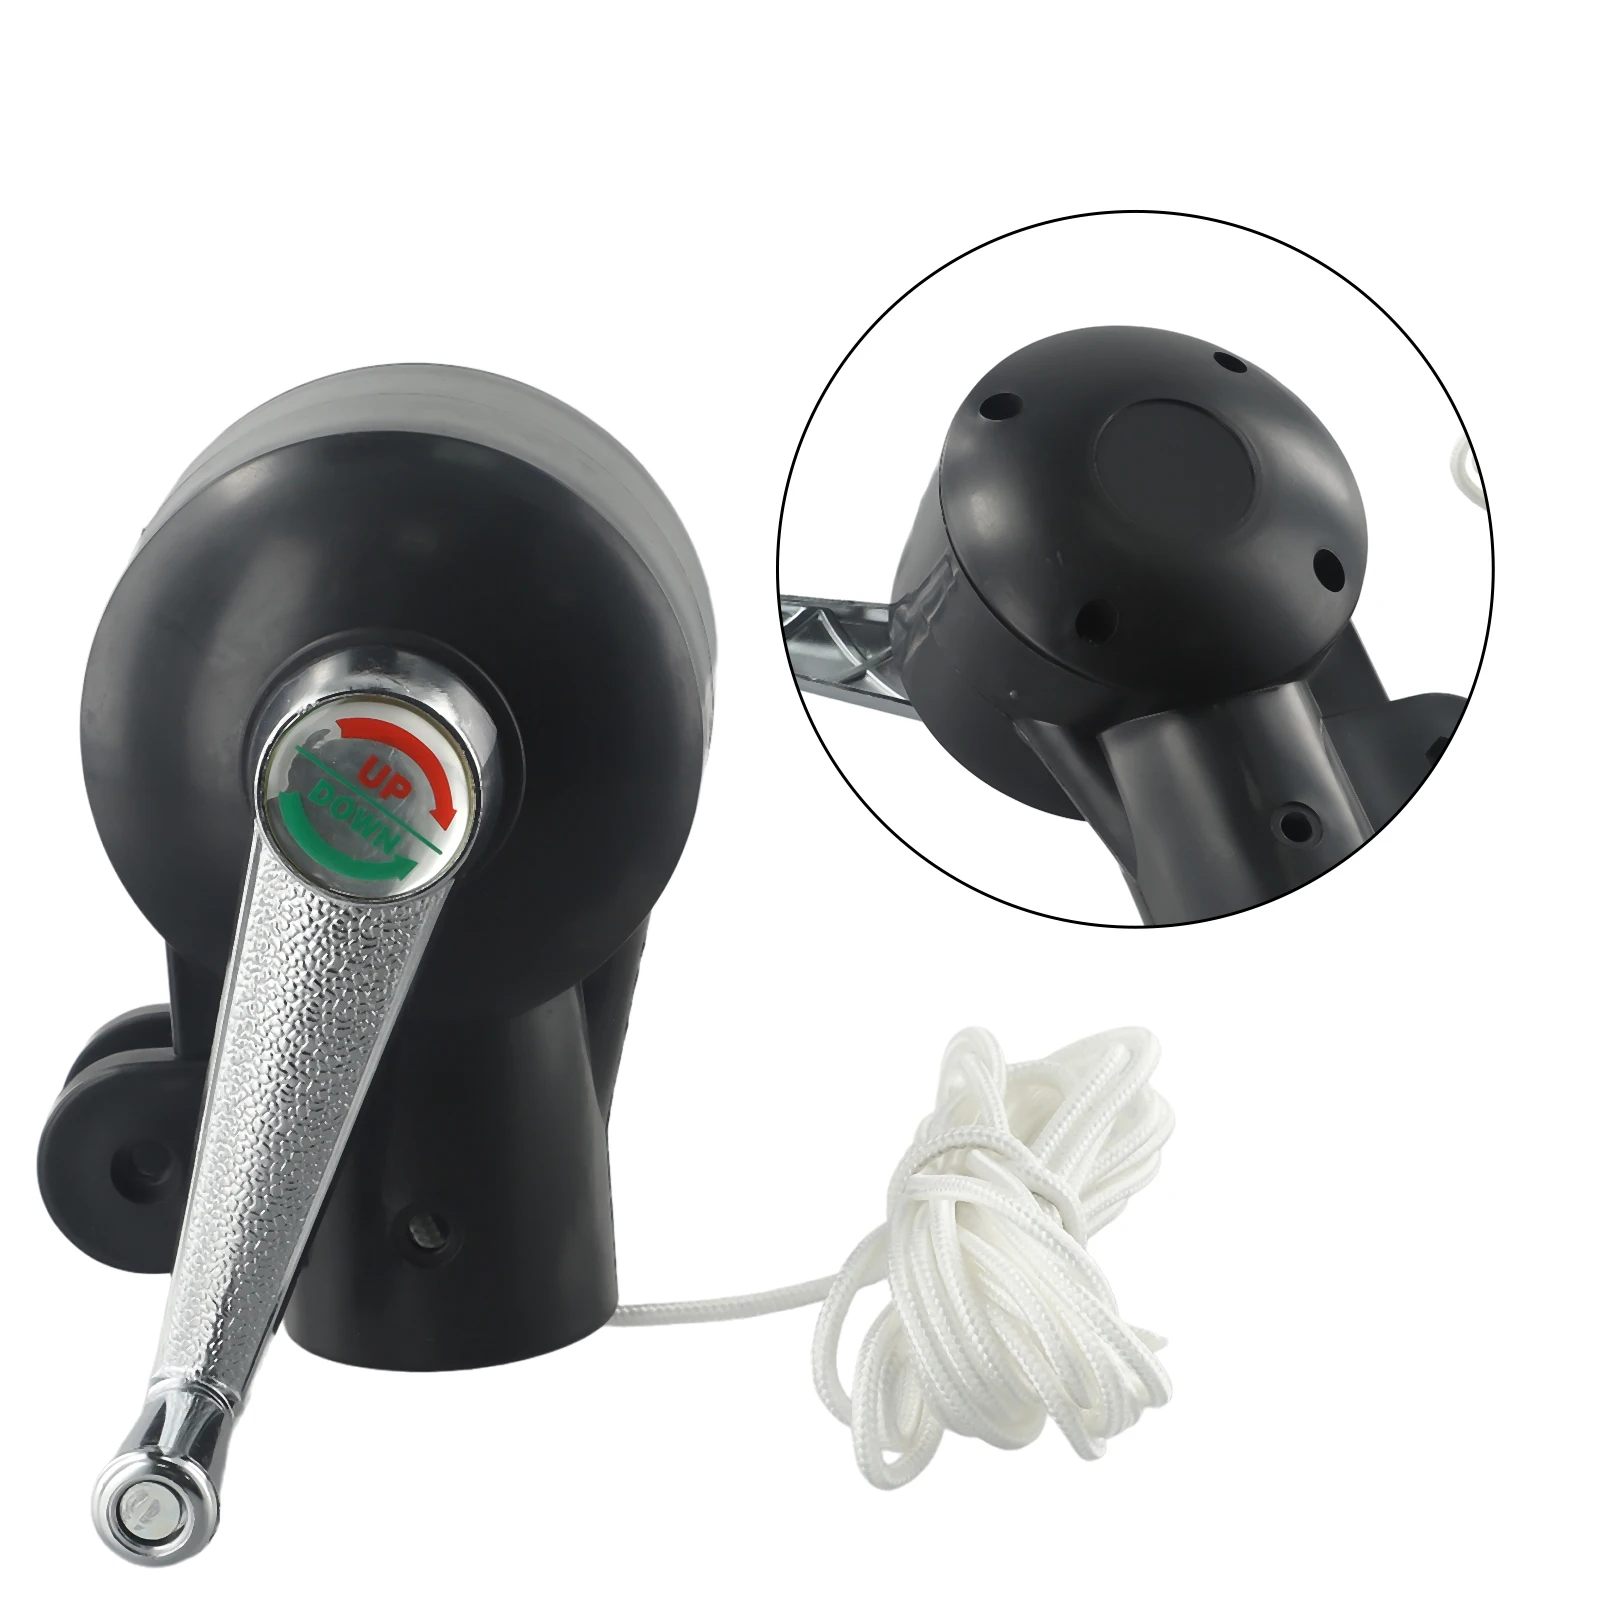 

Brand New Crank Handle Patio Umbrella Outdoor Replace Umbrella Holder Umbrella Spare Parts Accessories Crank Handle